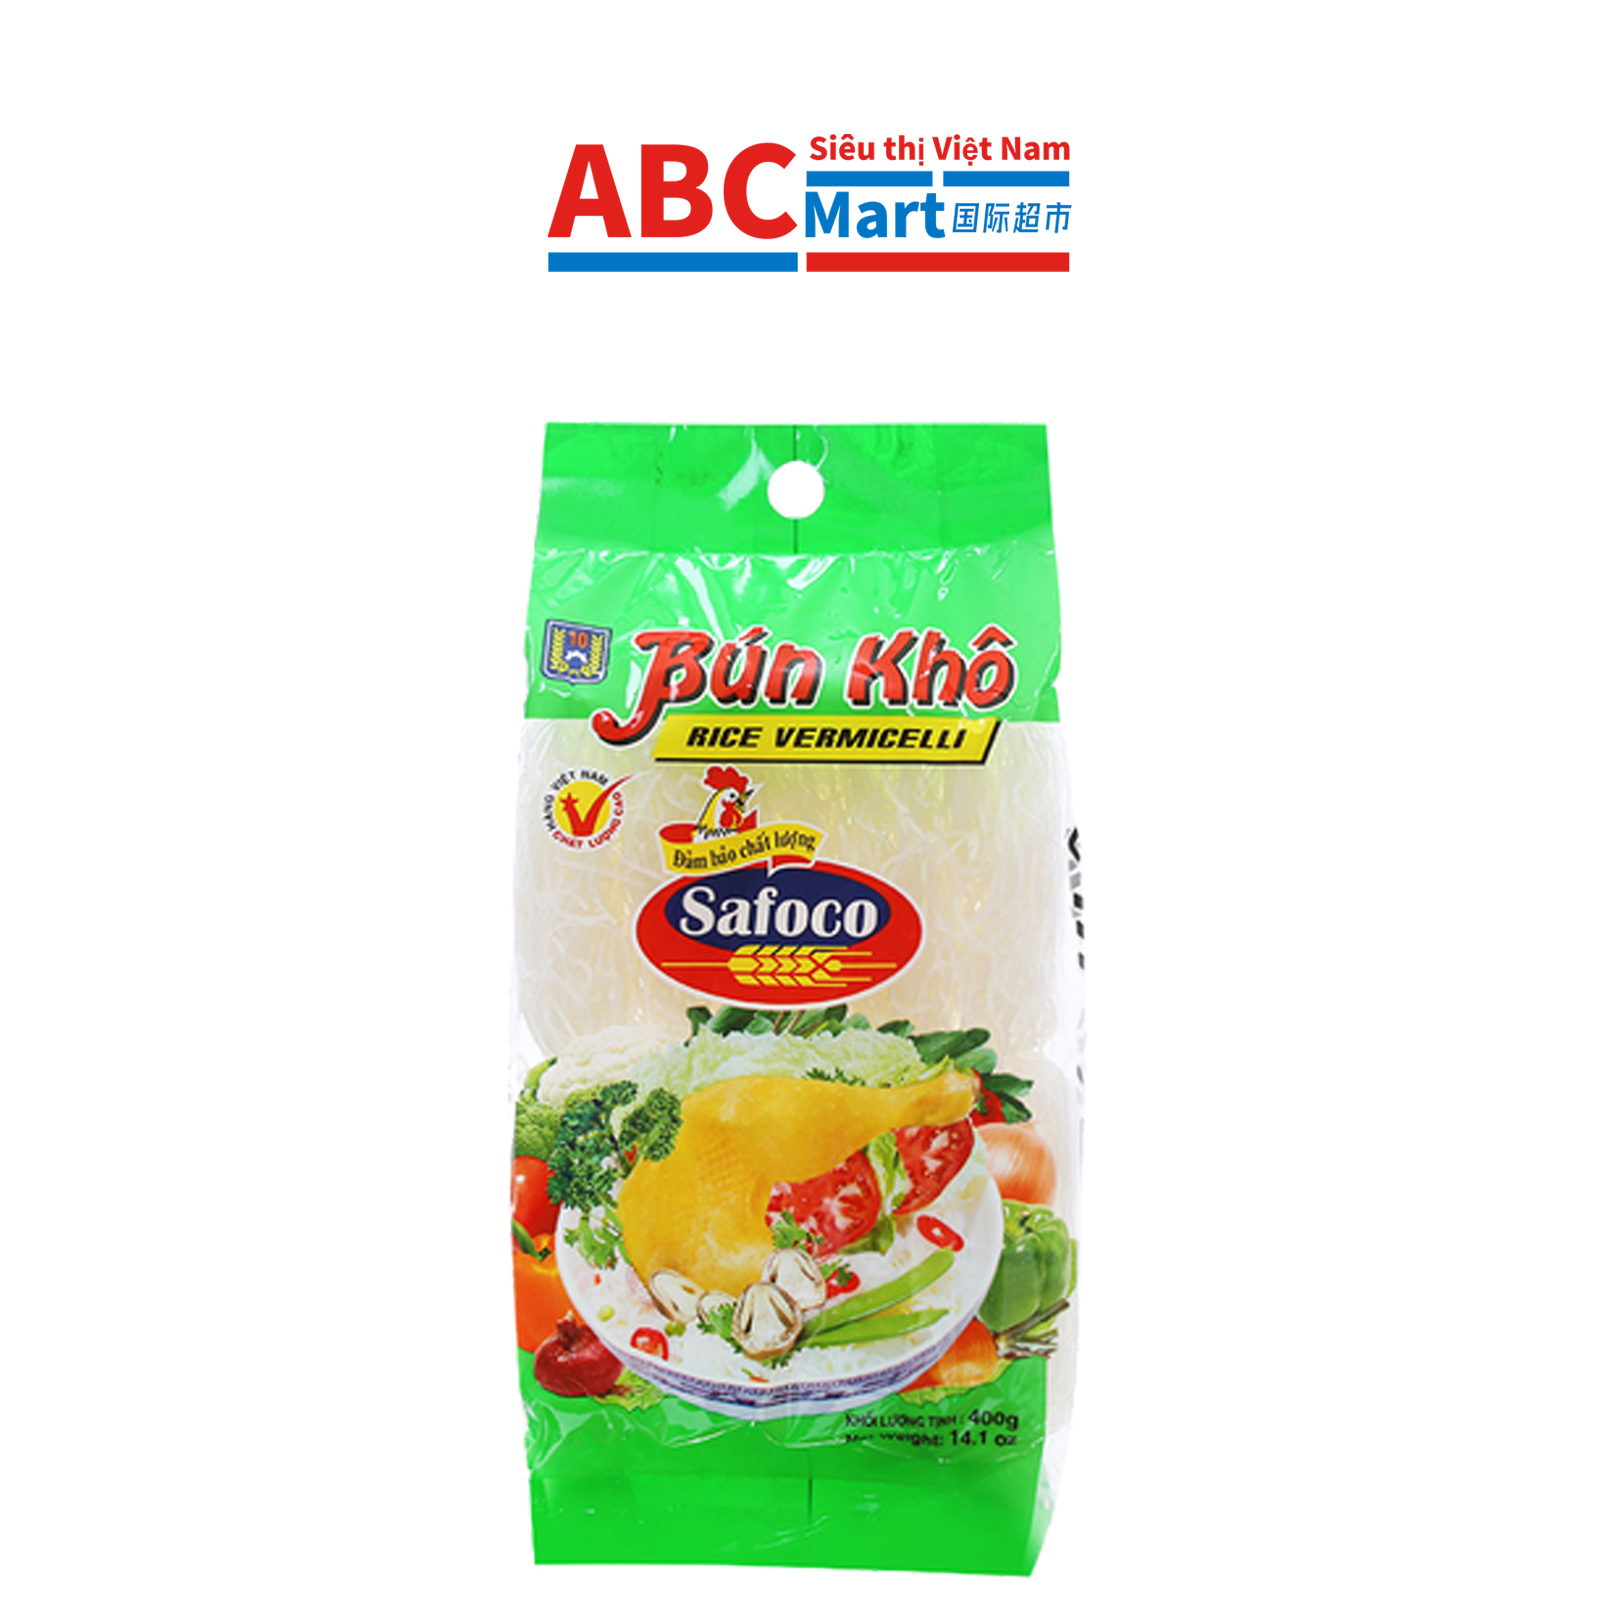 【Việt Nam-Bún khô Safoco gói 400g】Safoco干粉丝-ABCMart 国际超市